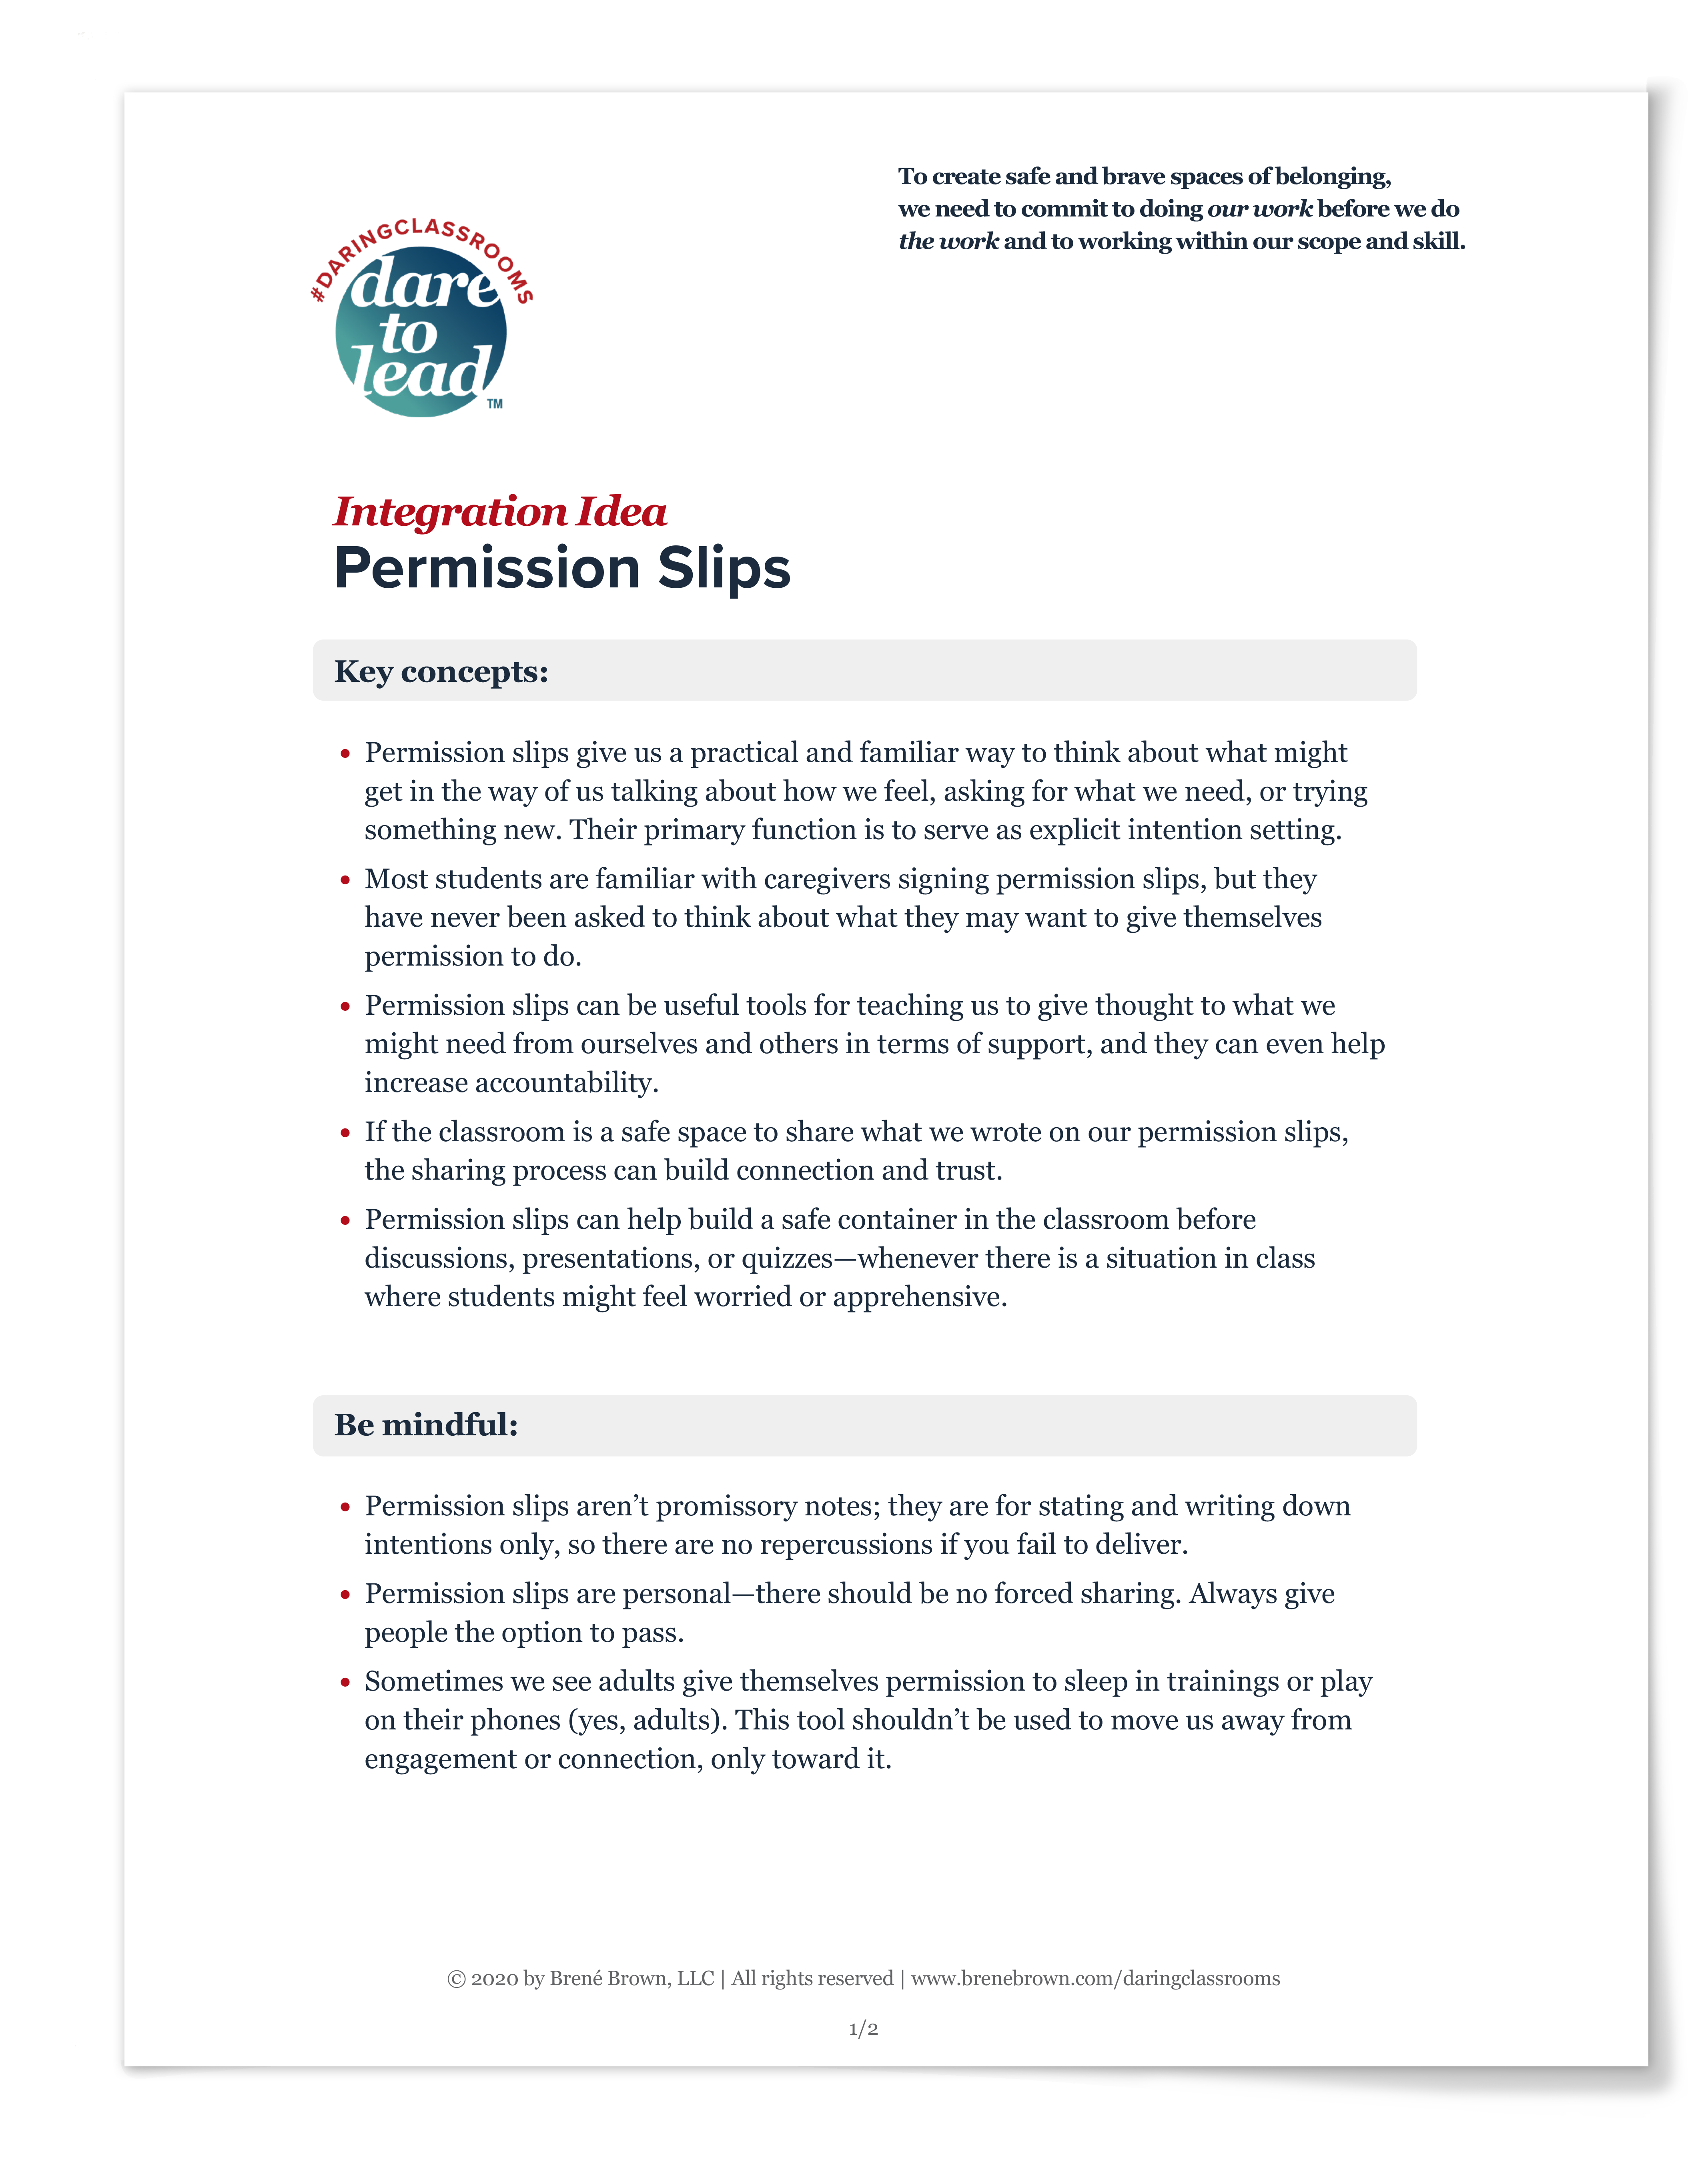 Permission Slip ideas for Daring Classrooms